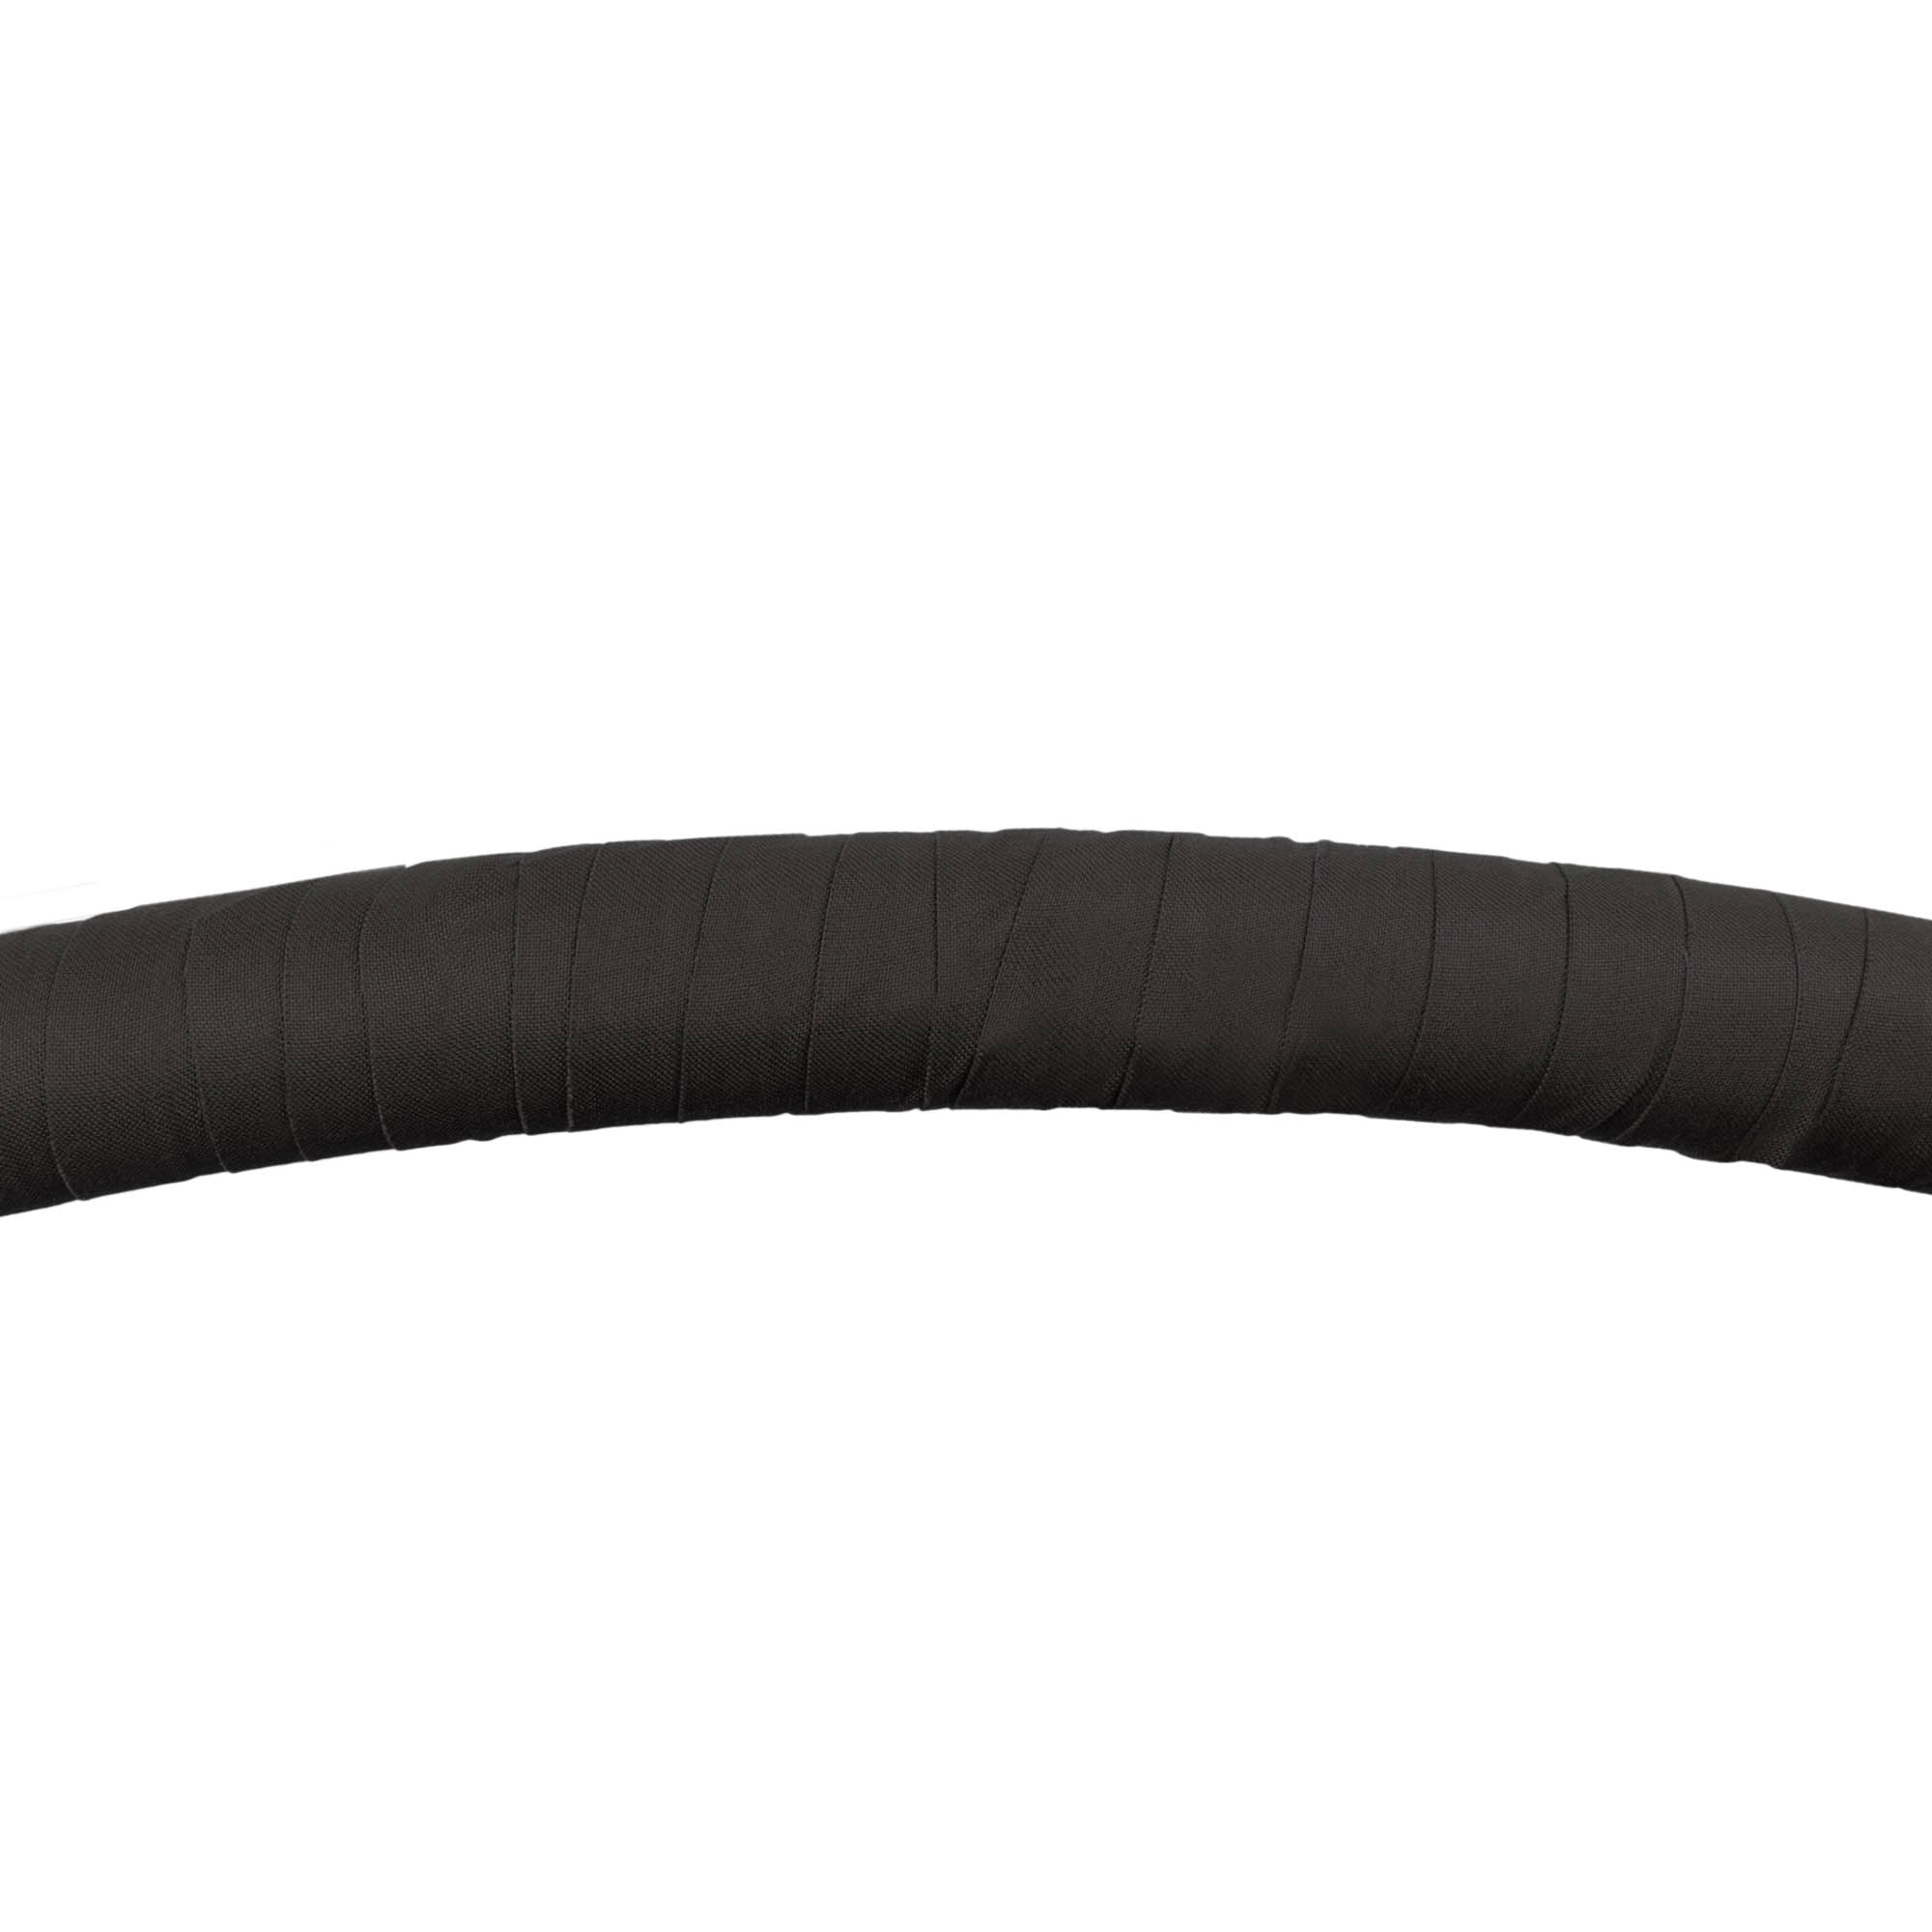 hoop taped with black 3.8cm wide